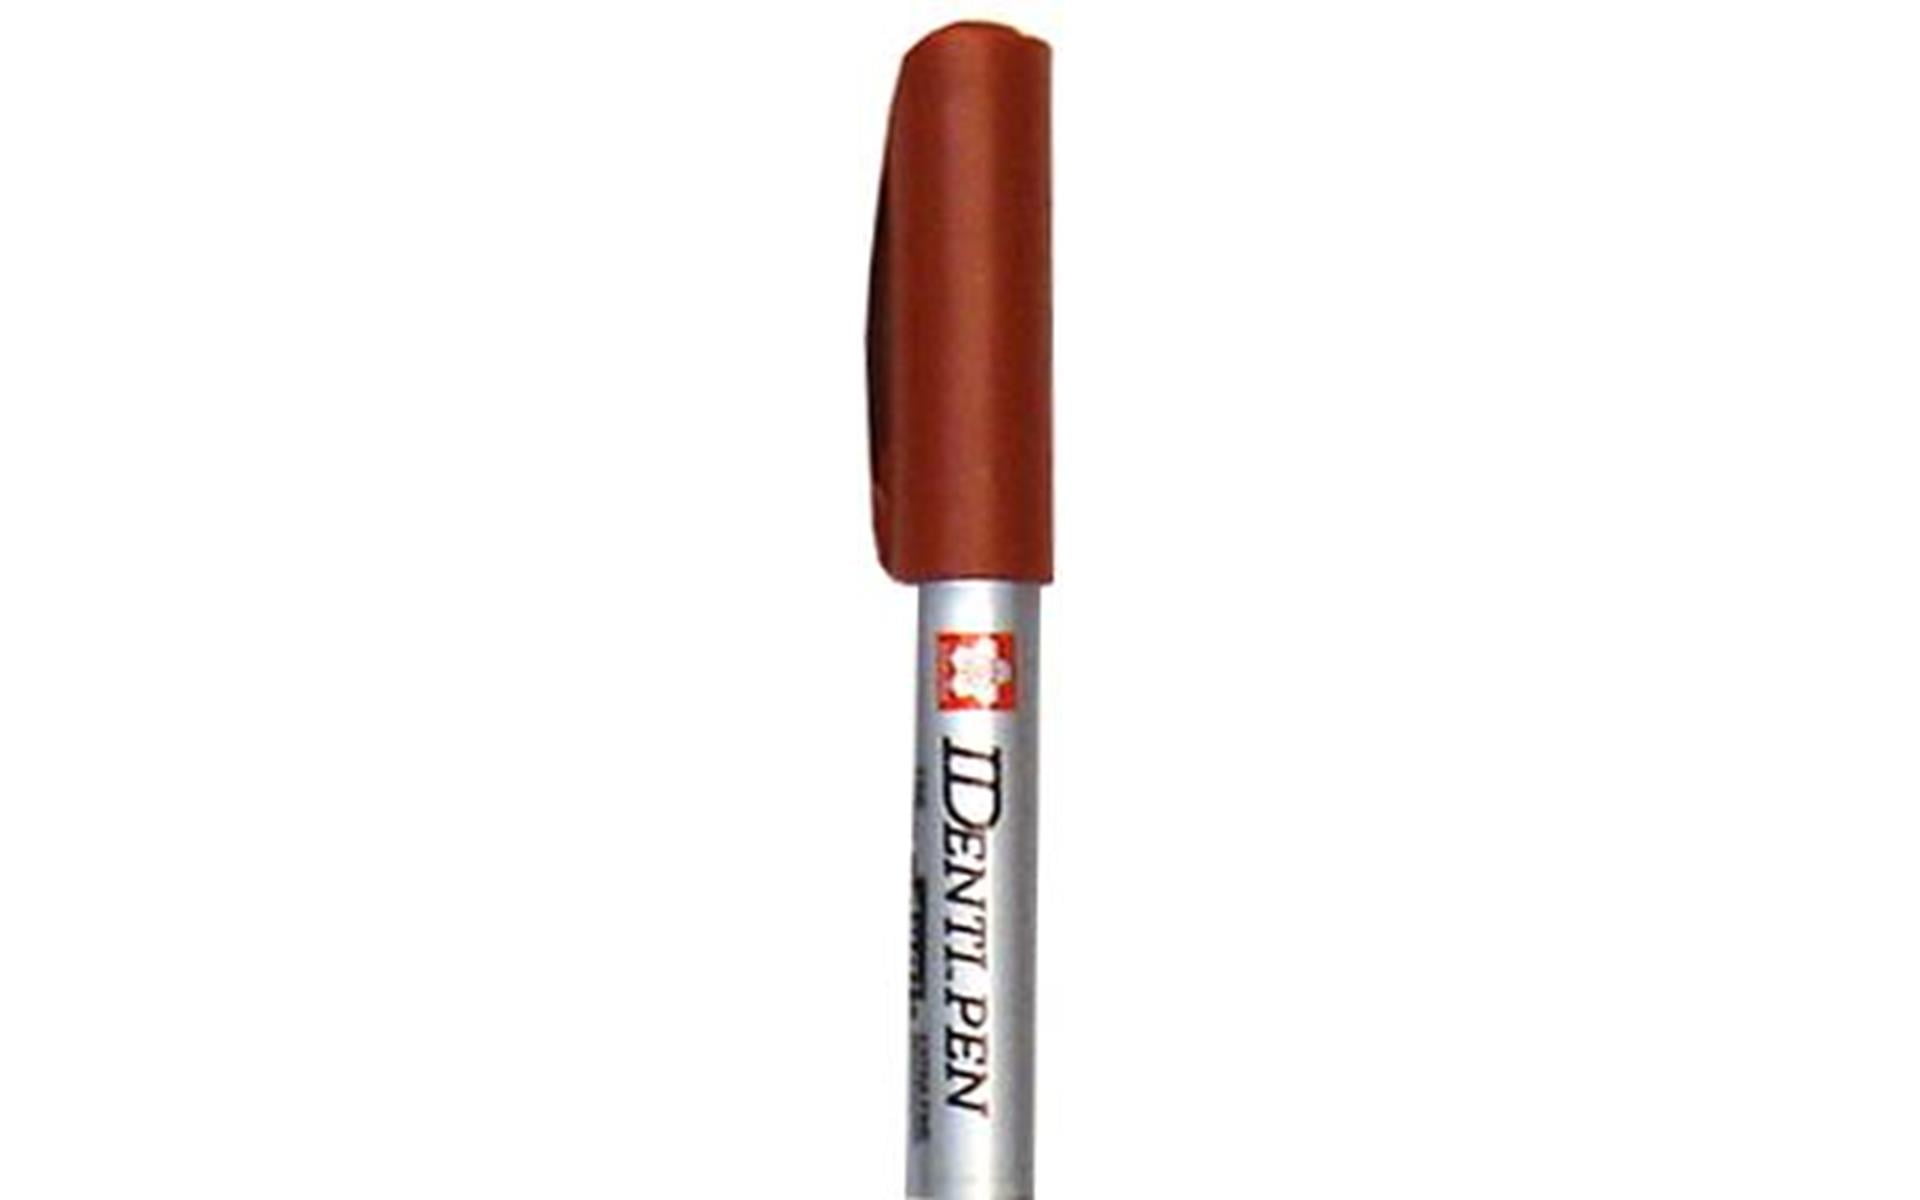 Sakura IDenti™-pen Dual Tip Black Marker - Retail / Single